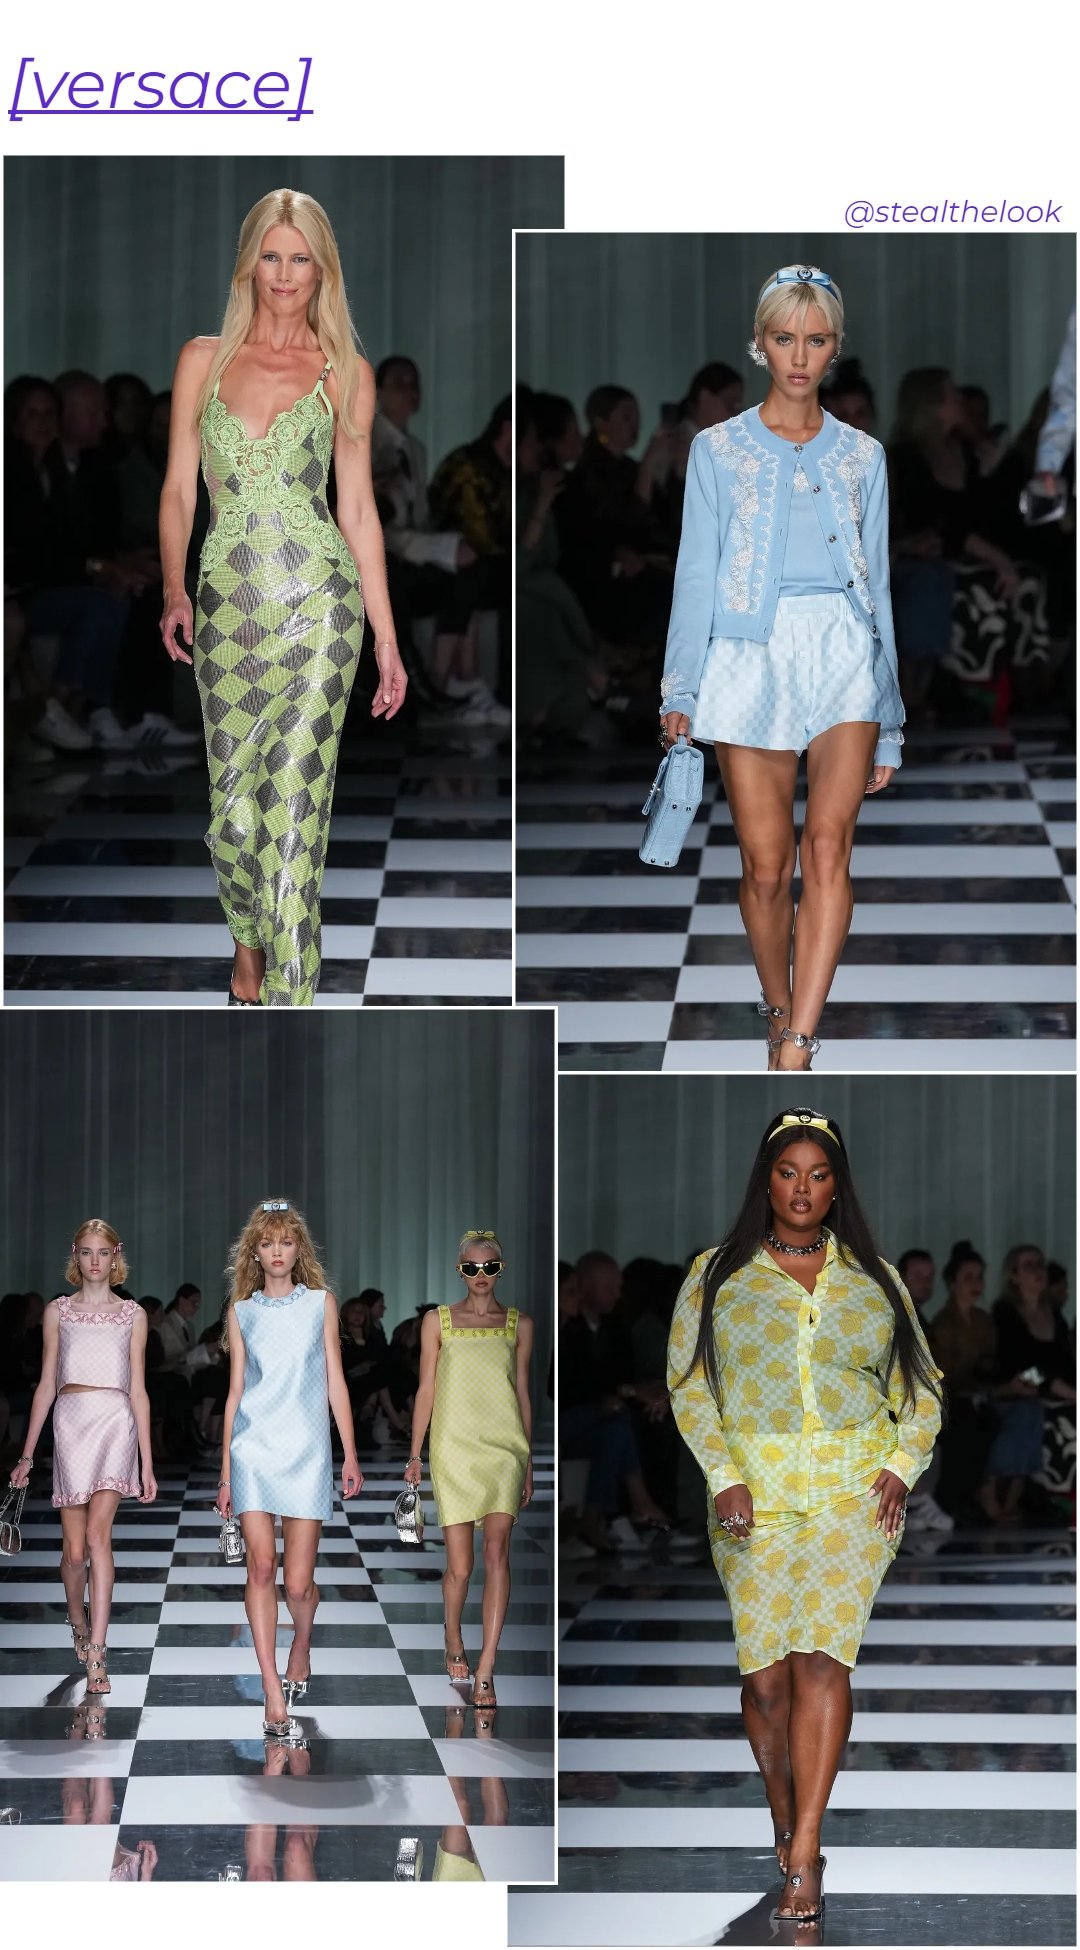 Versace - roupas diversas - Milano Fashion Week - primavera - colagem de imagens - https://stealthelook.com.br